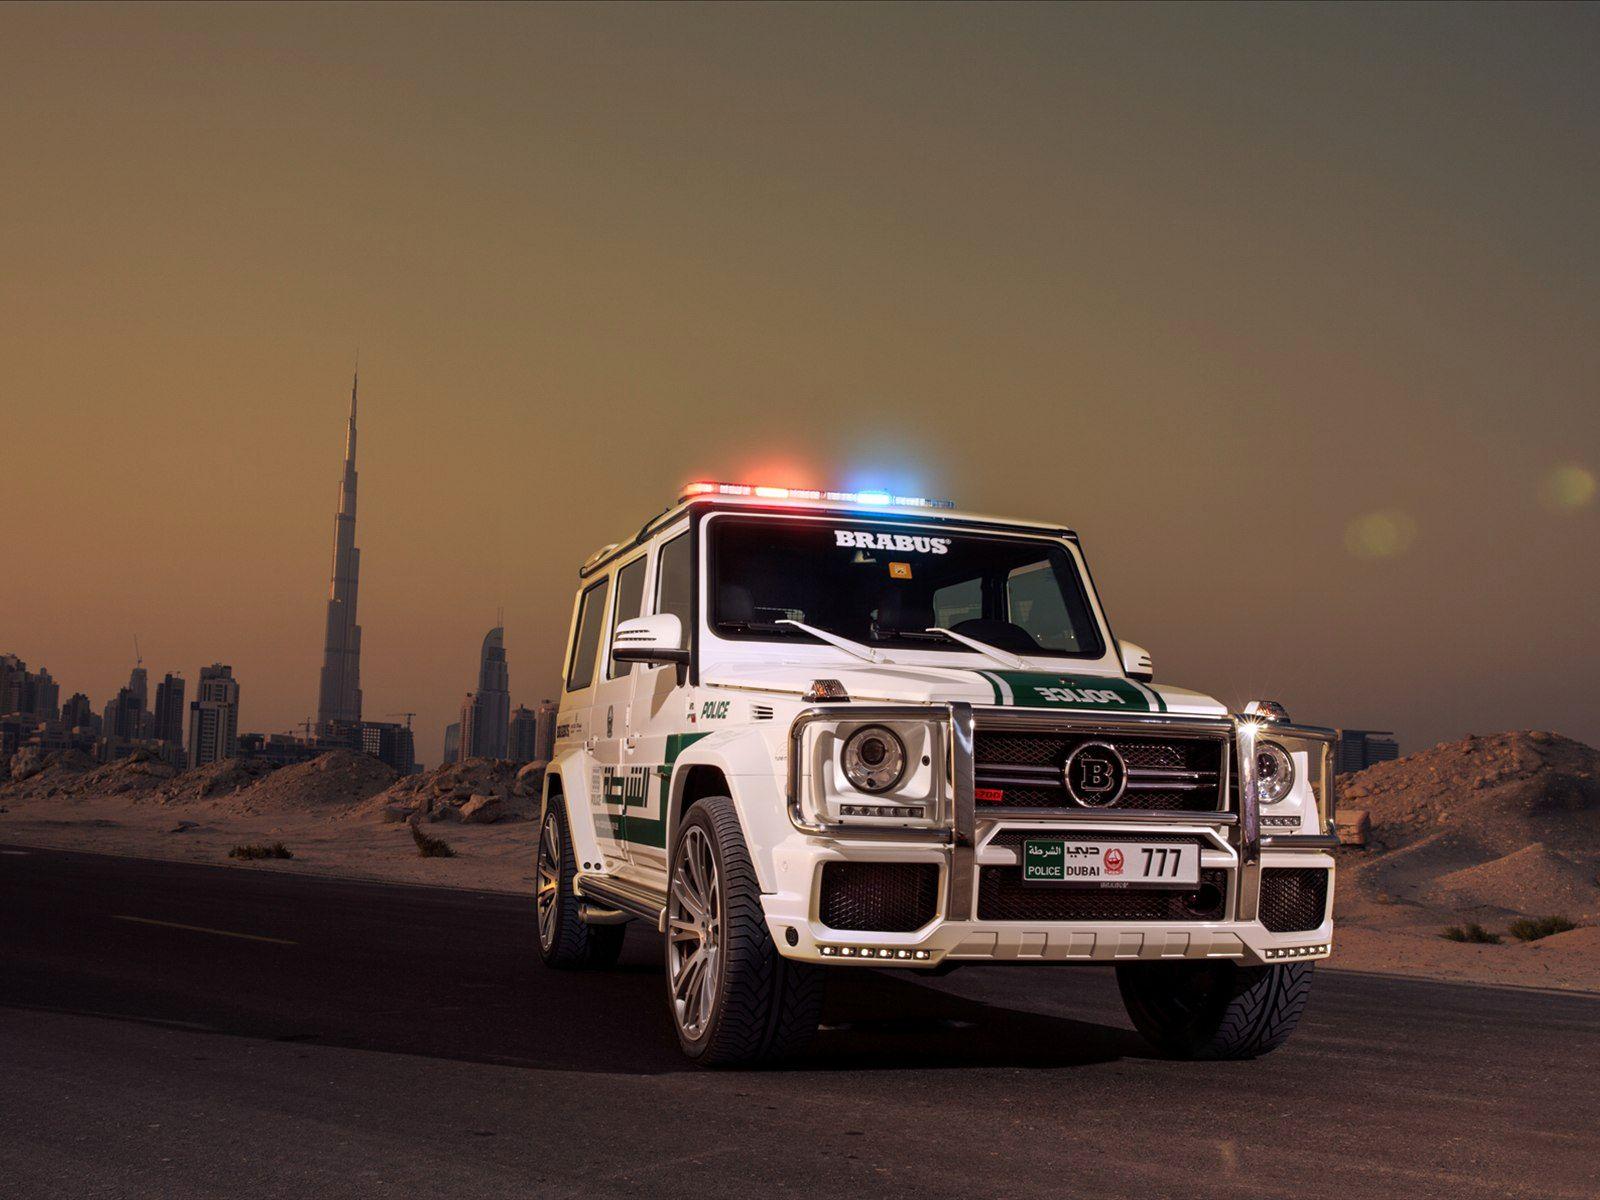 Police Cars Wallpaper Fresh Brabus B63s 700 Widestar Dubai Police